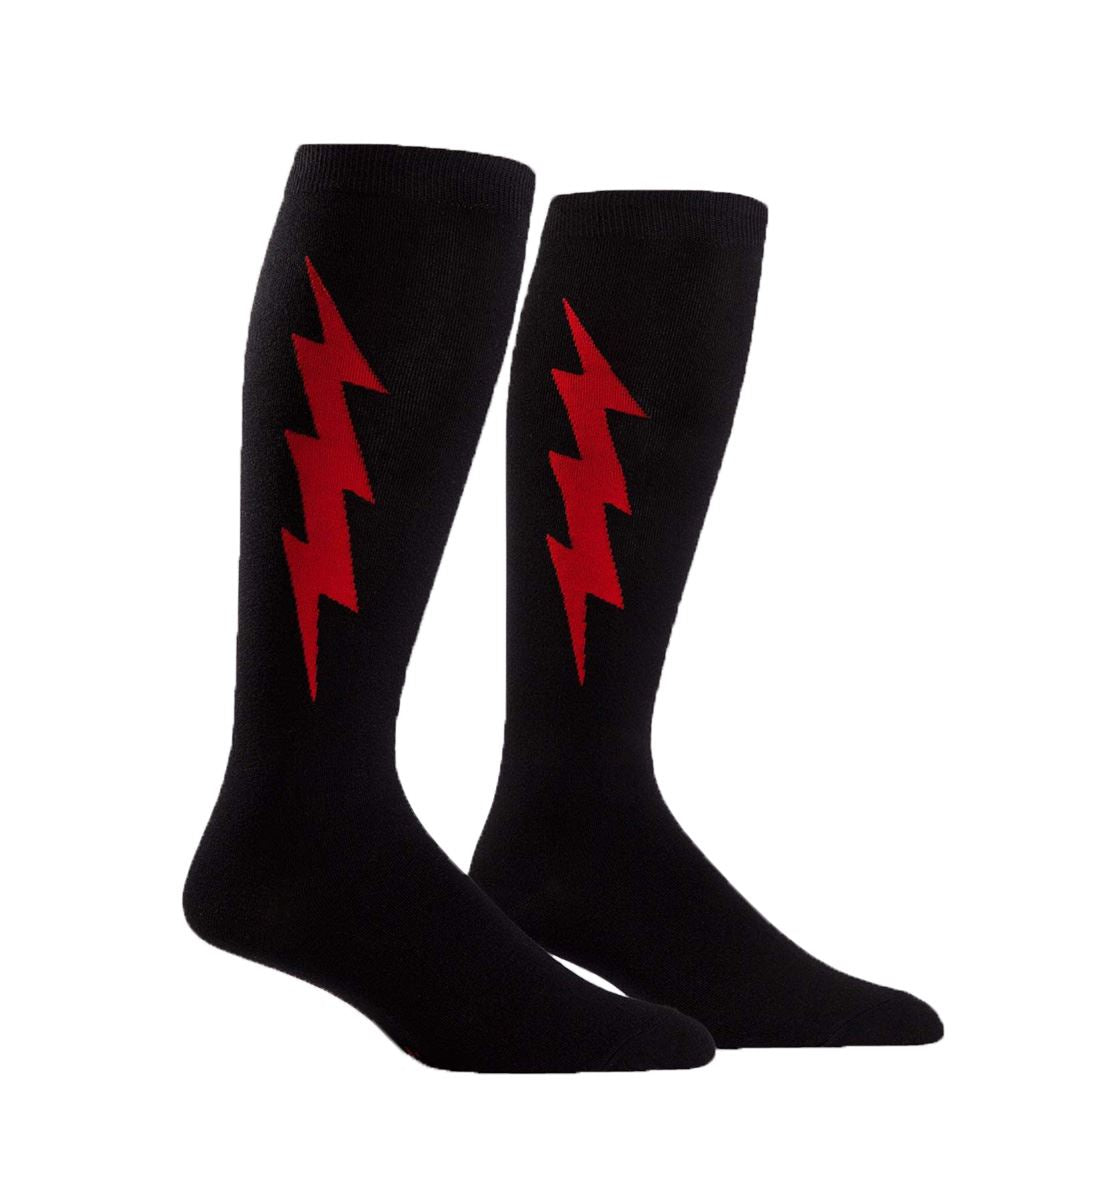 SOCK it to me Unisex Stretch-It Knee High Socks (s0020),Super Hero (Red & Black) - Super Hero (Red & Black),One Size